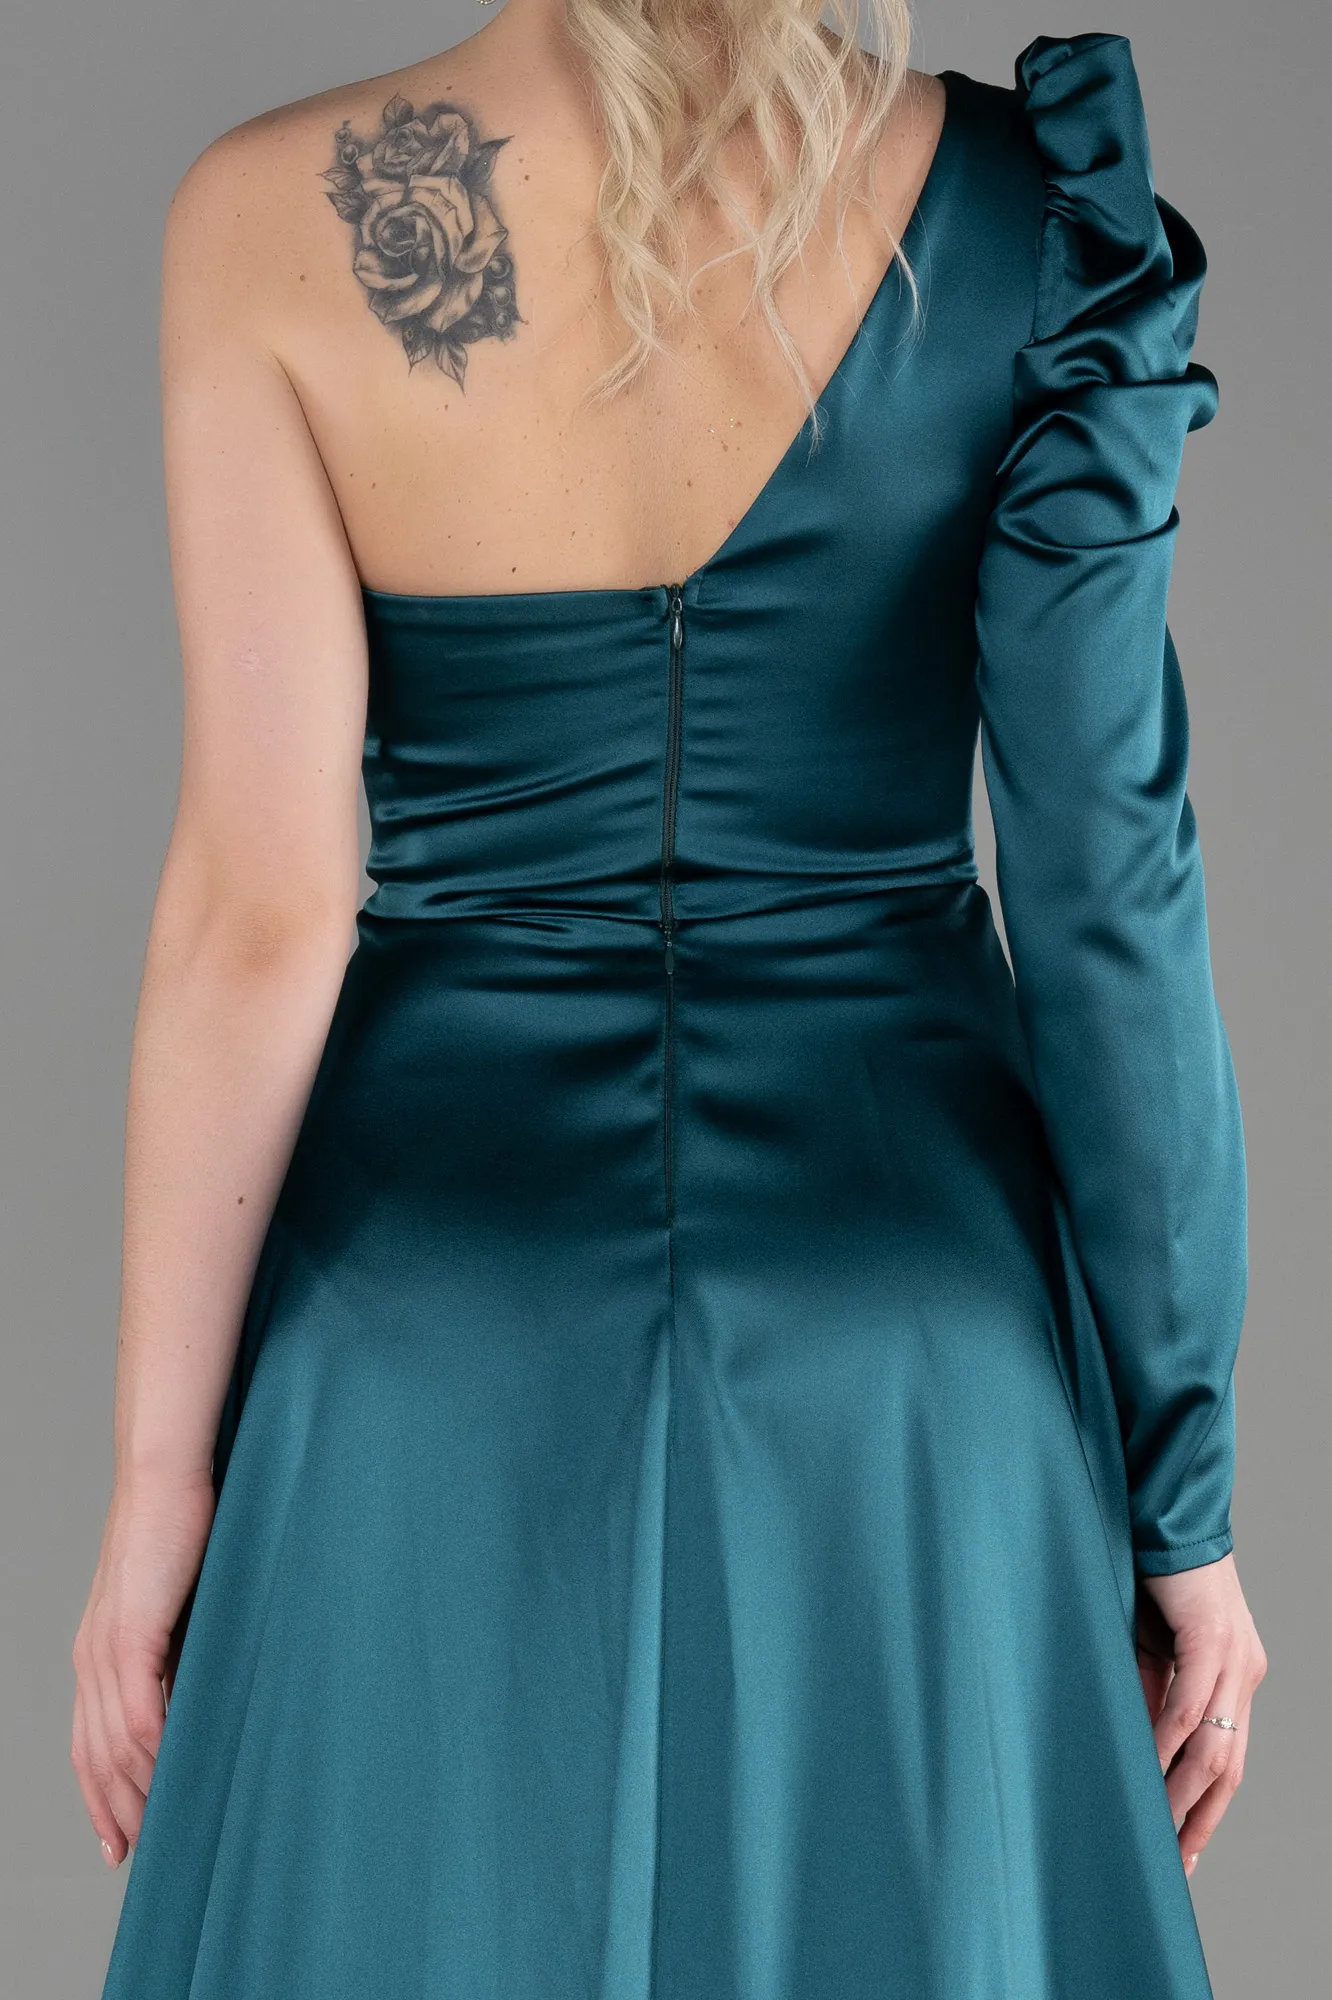 Emerald Green-Long Satin Evening Dress ABU1715